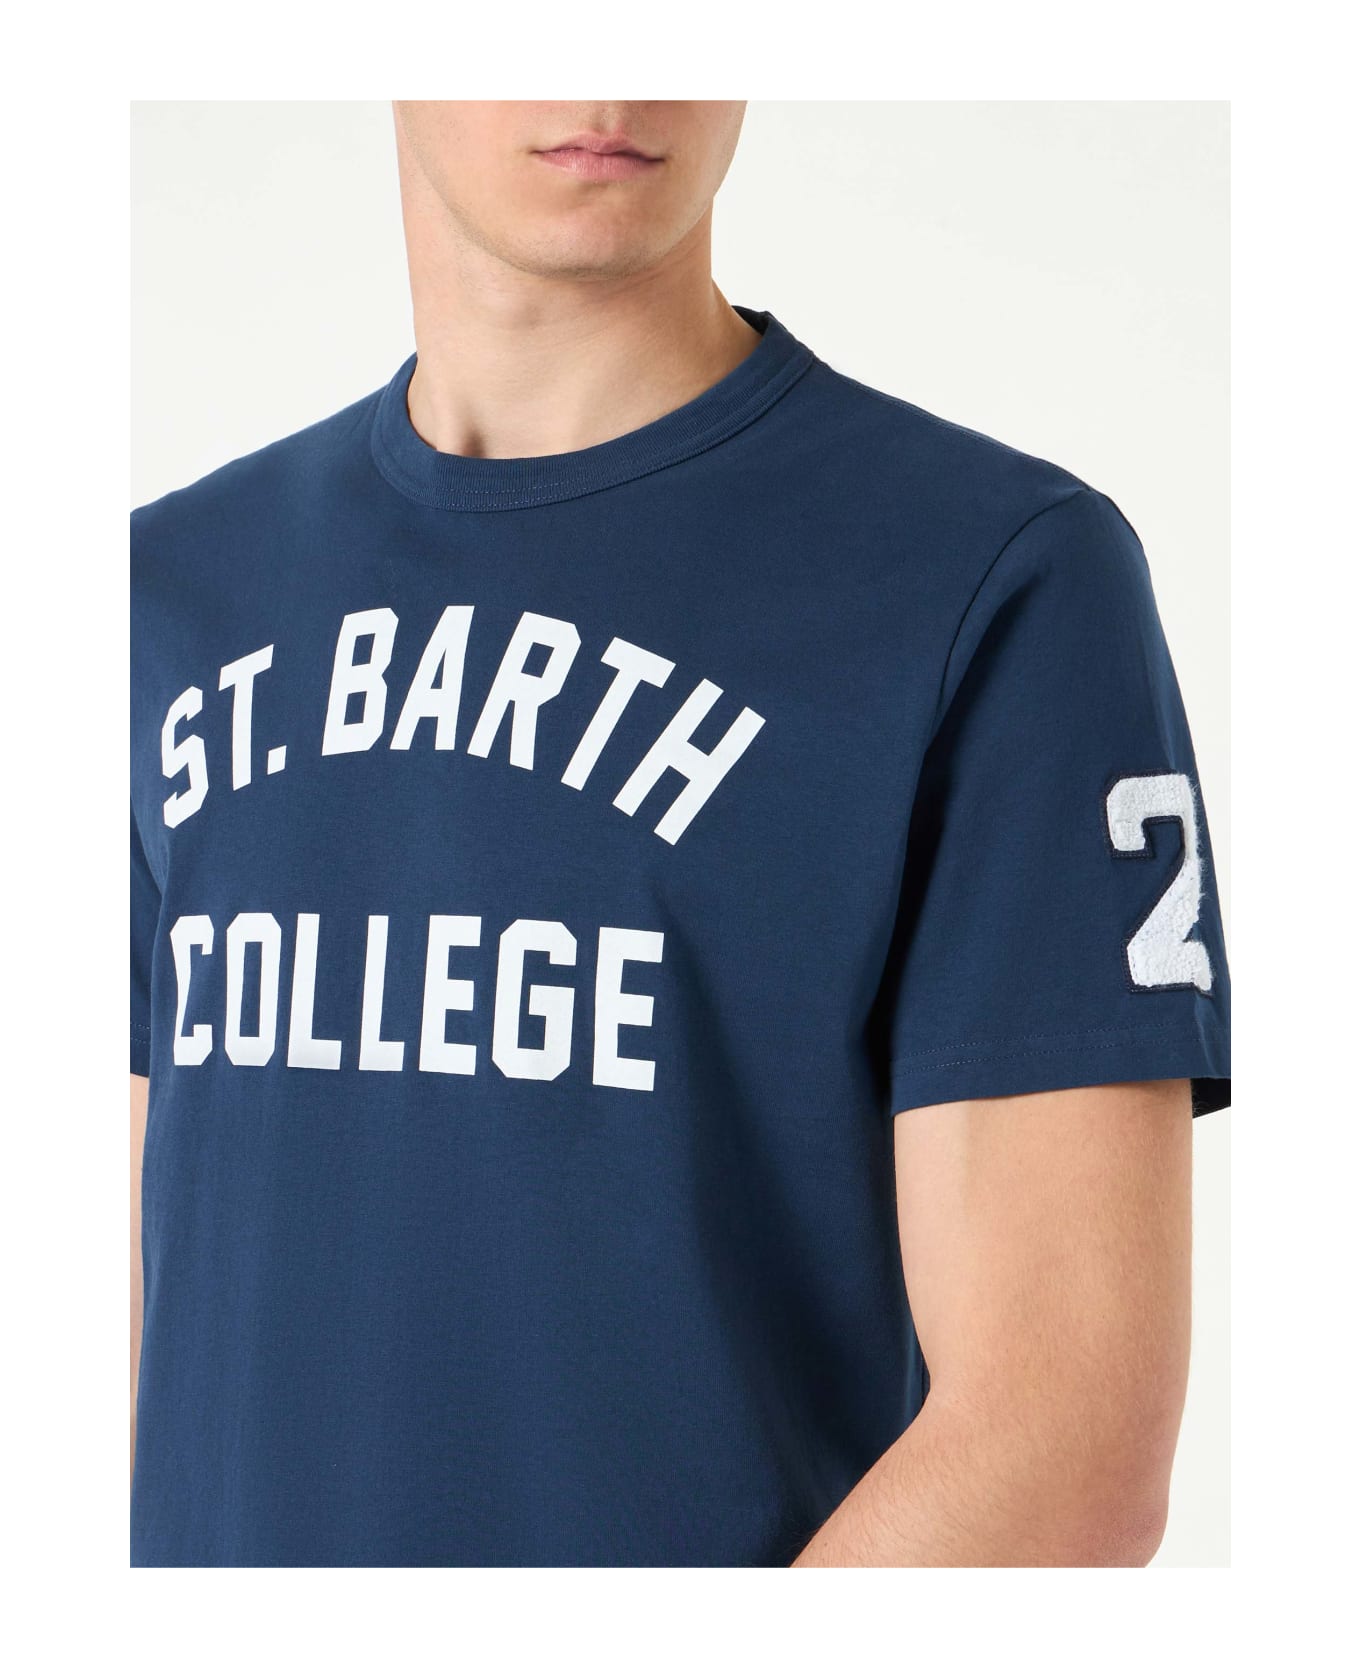 MC2 Saint Barth Man Cotton T-shirt With St. Barth College Lettering - BLUE